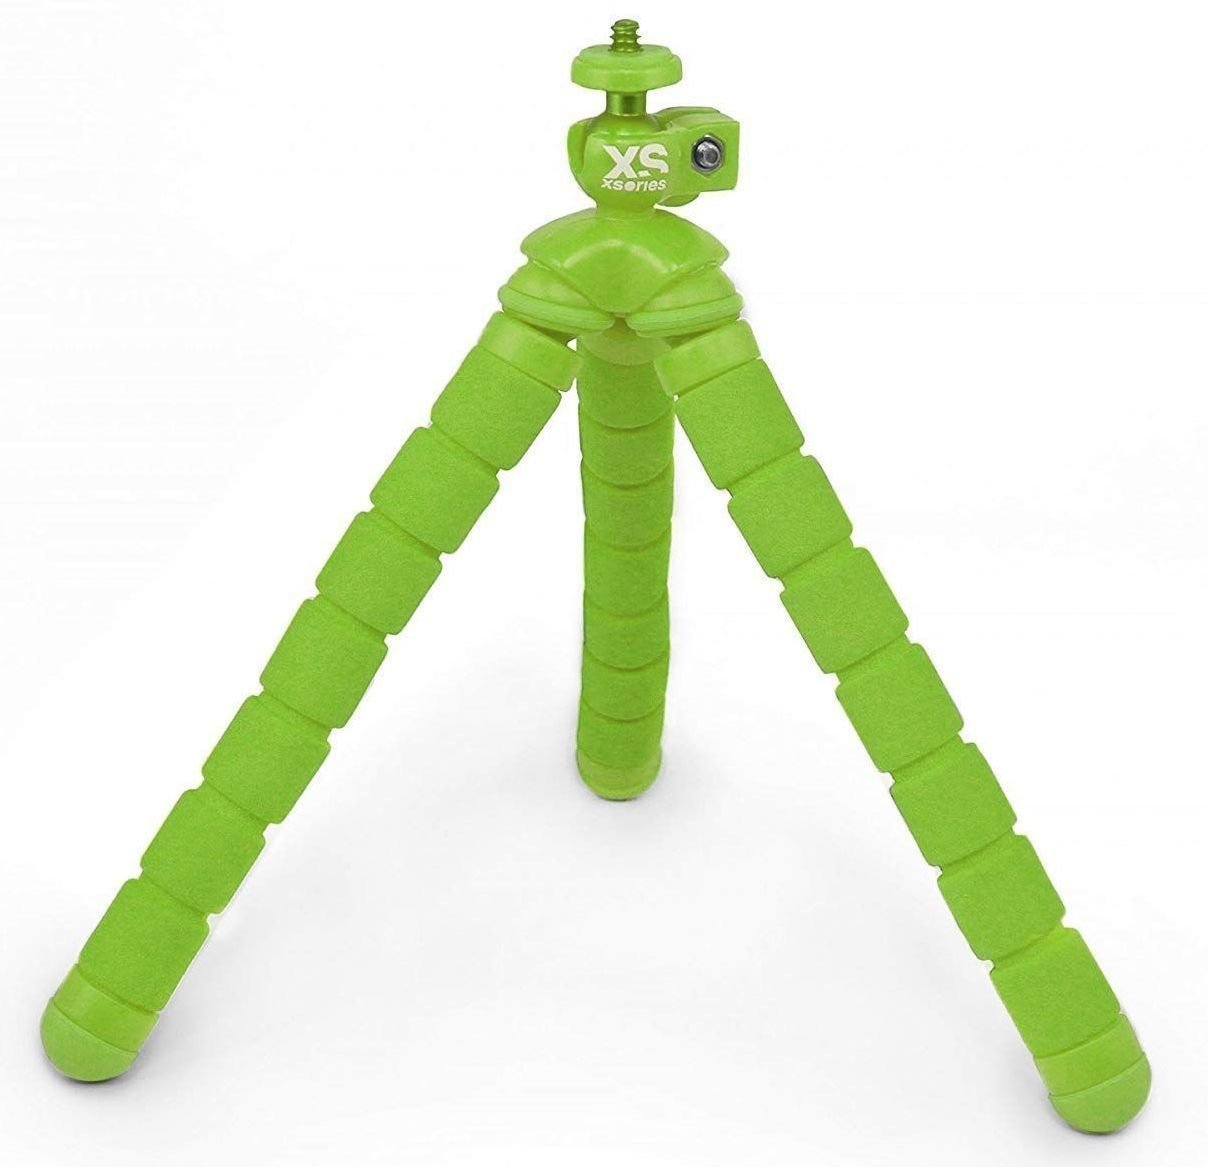 GoPro Accessories XSories Bendy Green Green